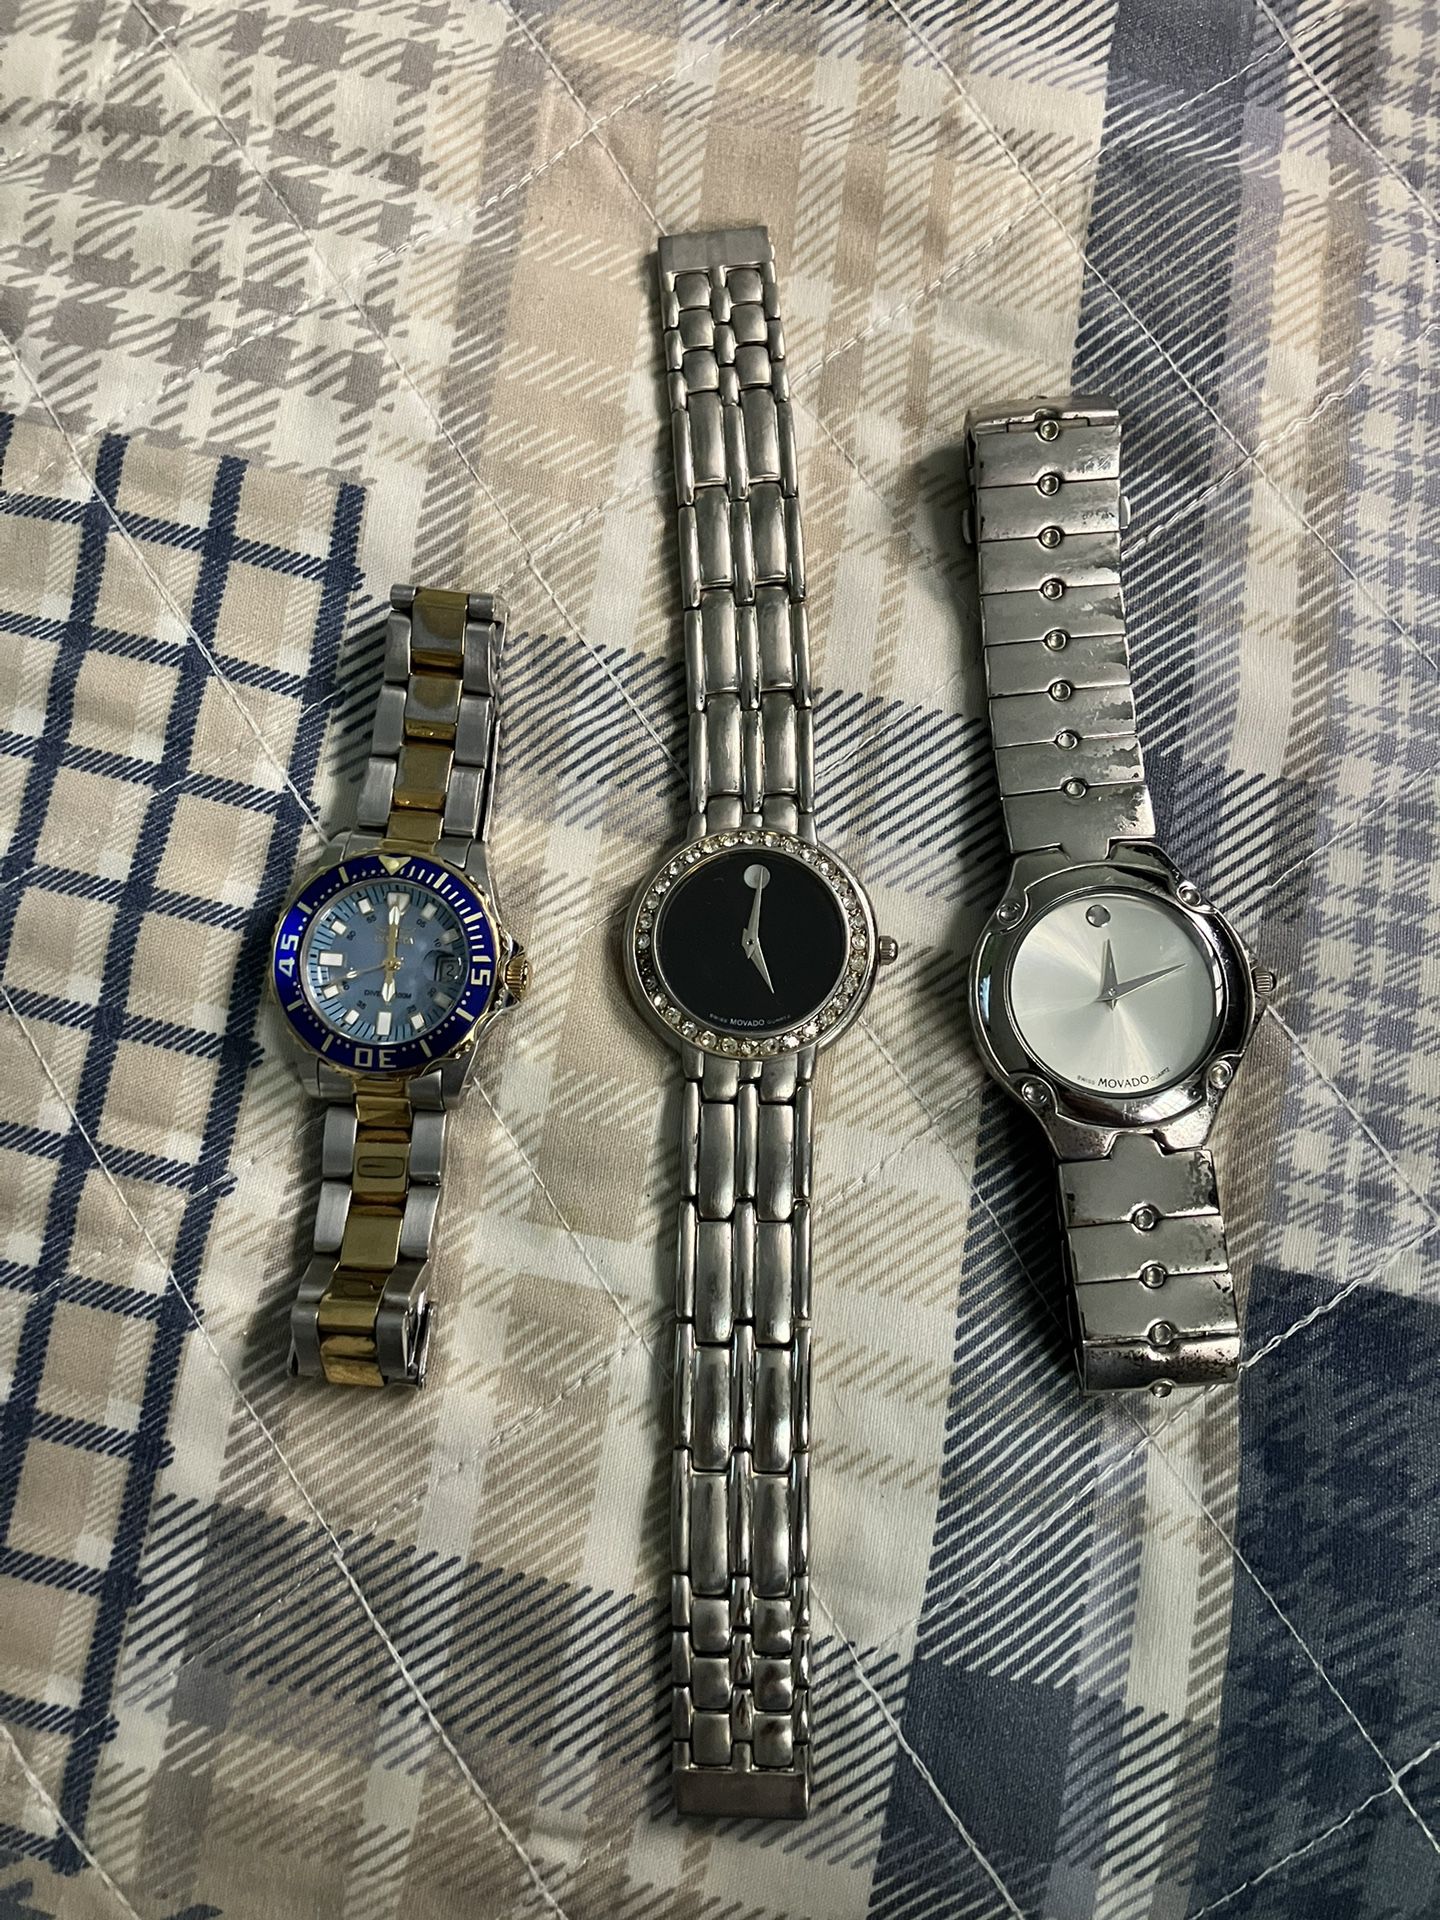 3 Watches . Invicta, Movado, Movado They Need Polishing All Three 